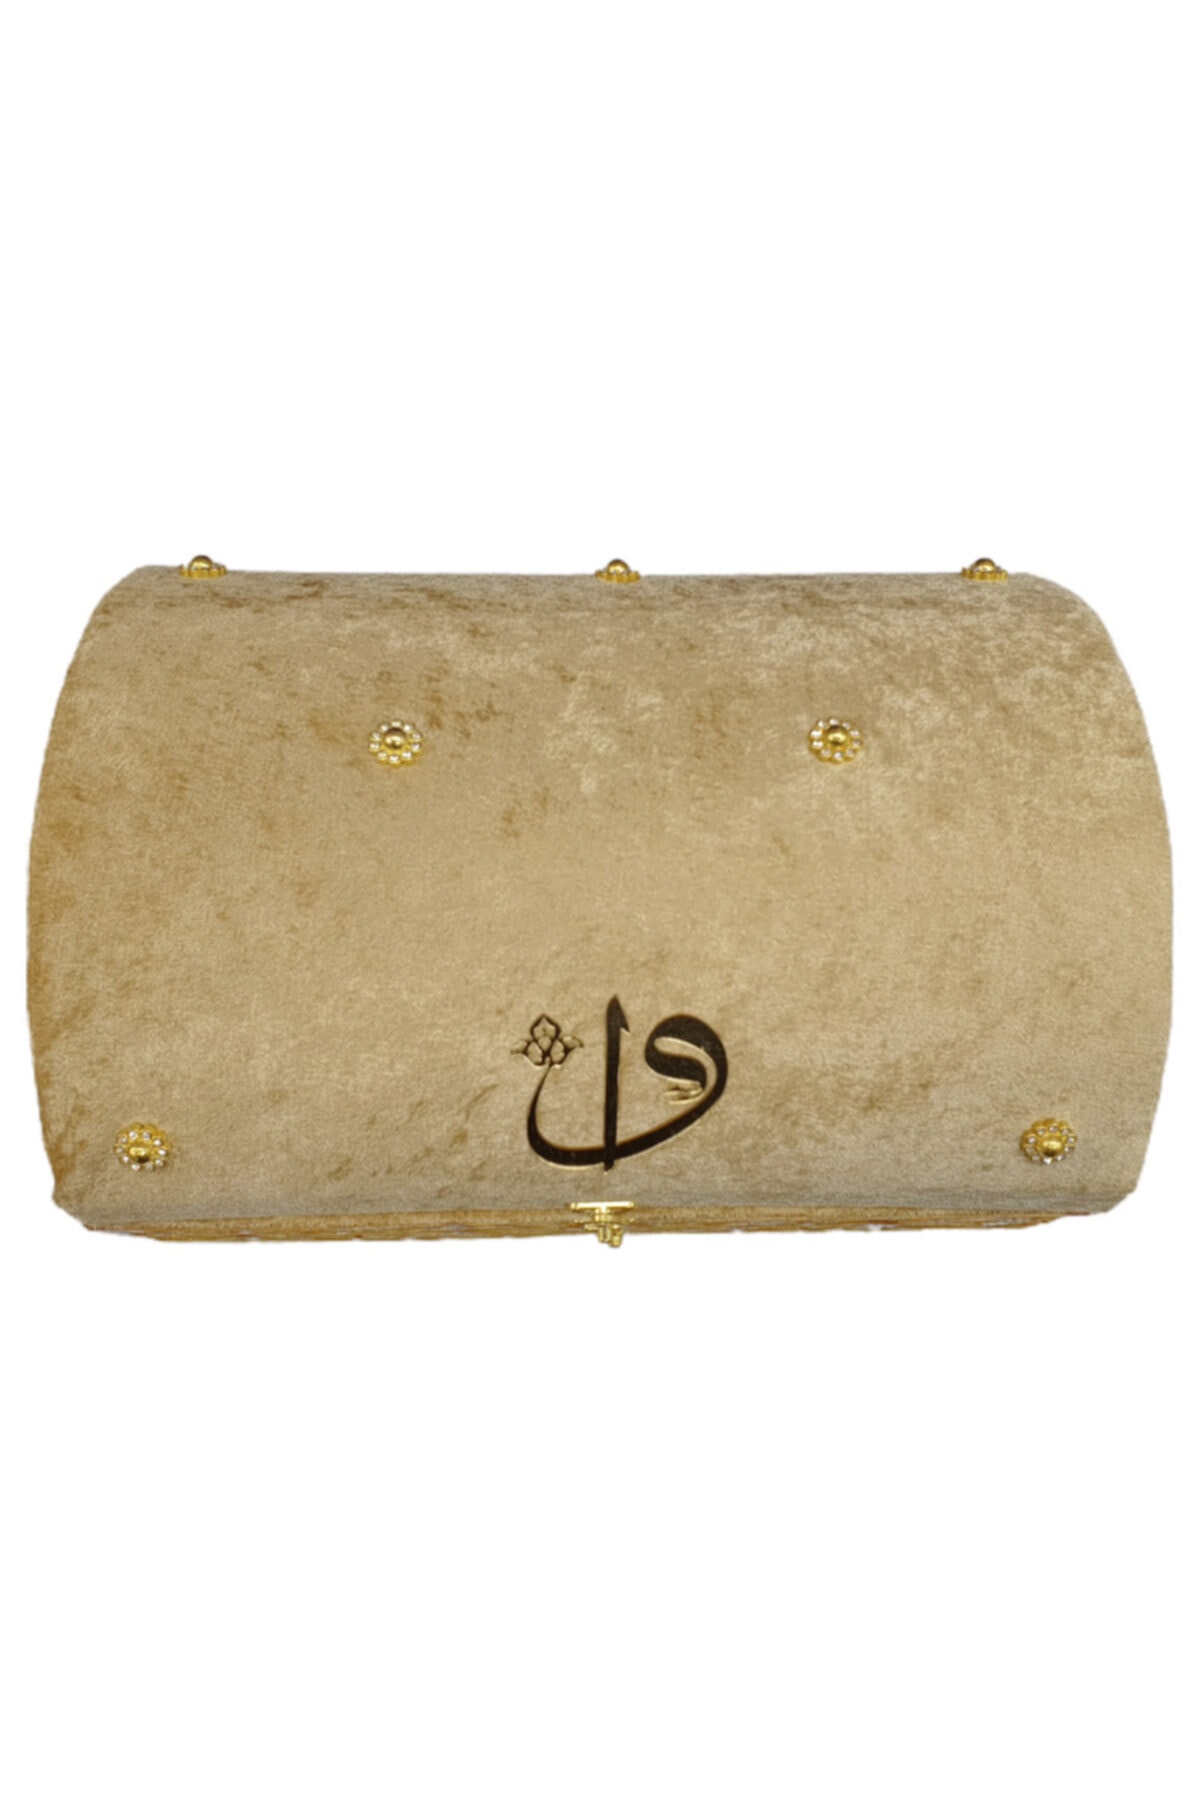 Velvet Lined Footed Treasure Boxed Pleksili Beige Medium Size Holy Quran